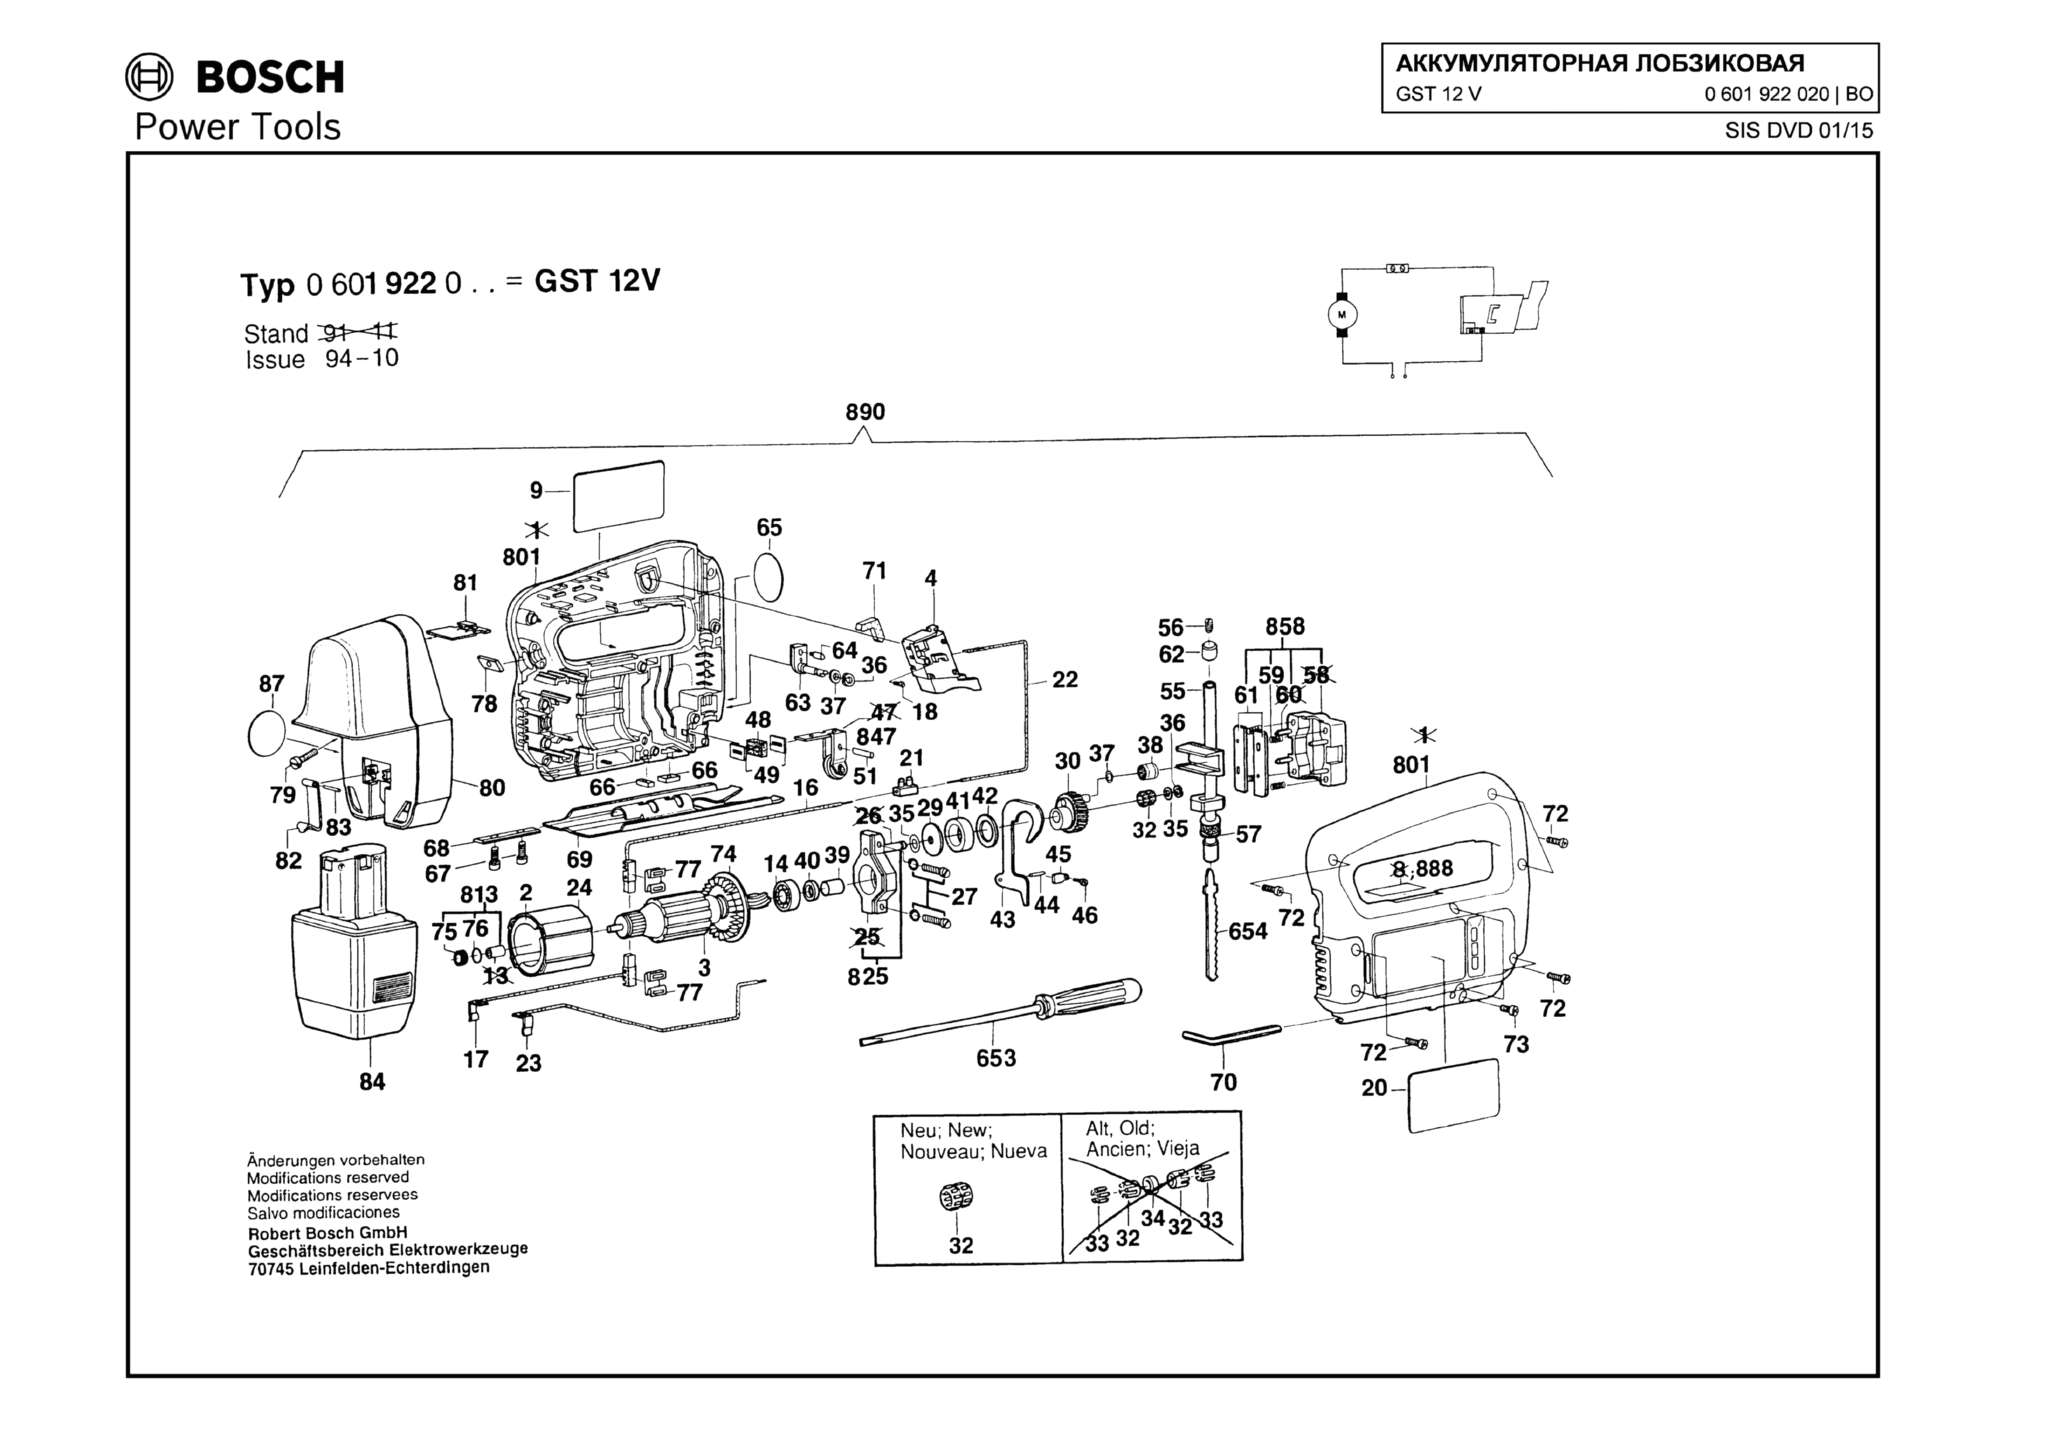 Запчасти, схема и деталировка Bosch GST 12 V (ТИП 0601922020)